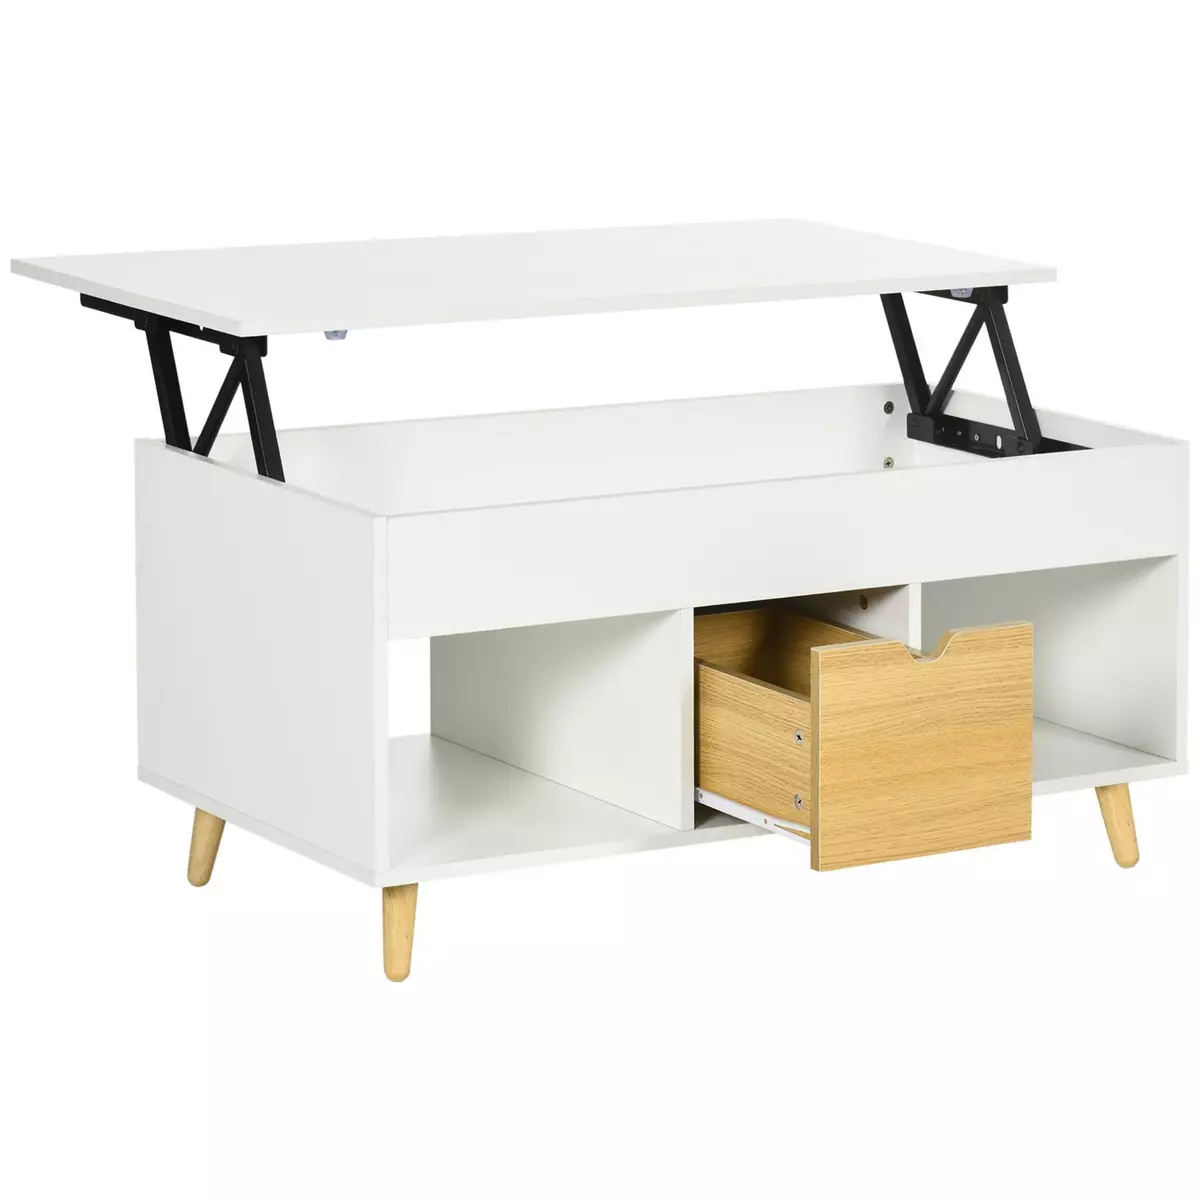 HOMCOM Table basse relevable - tiroir, 2 niches, coffre - dim. 100L x 50l x 49H cm - bois clair blanc